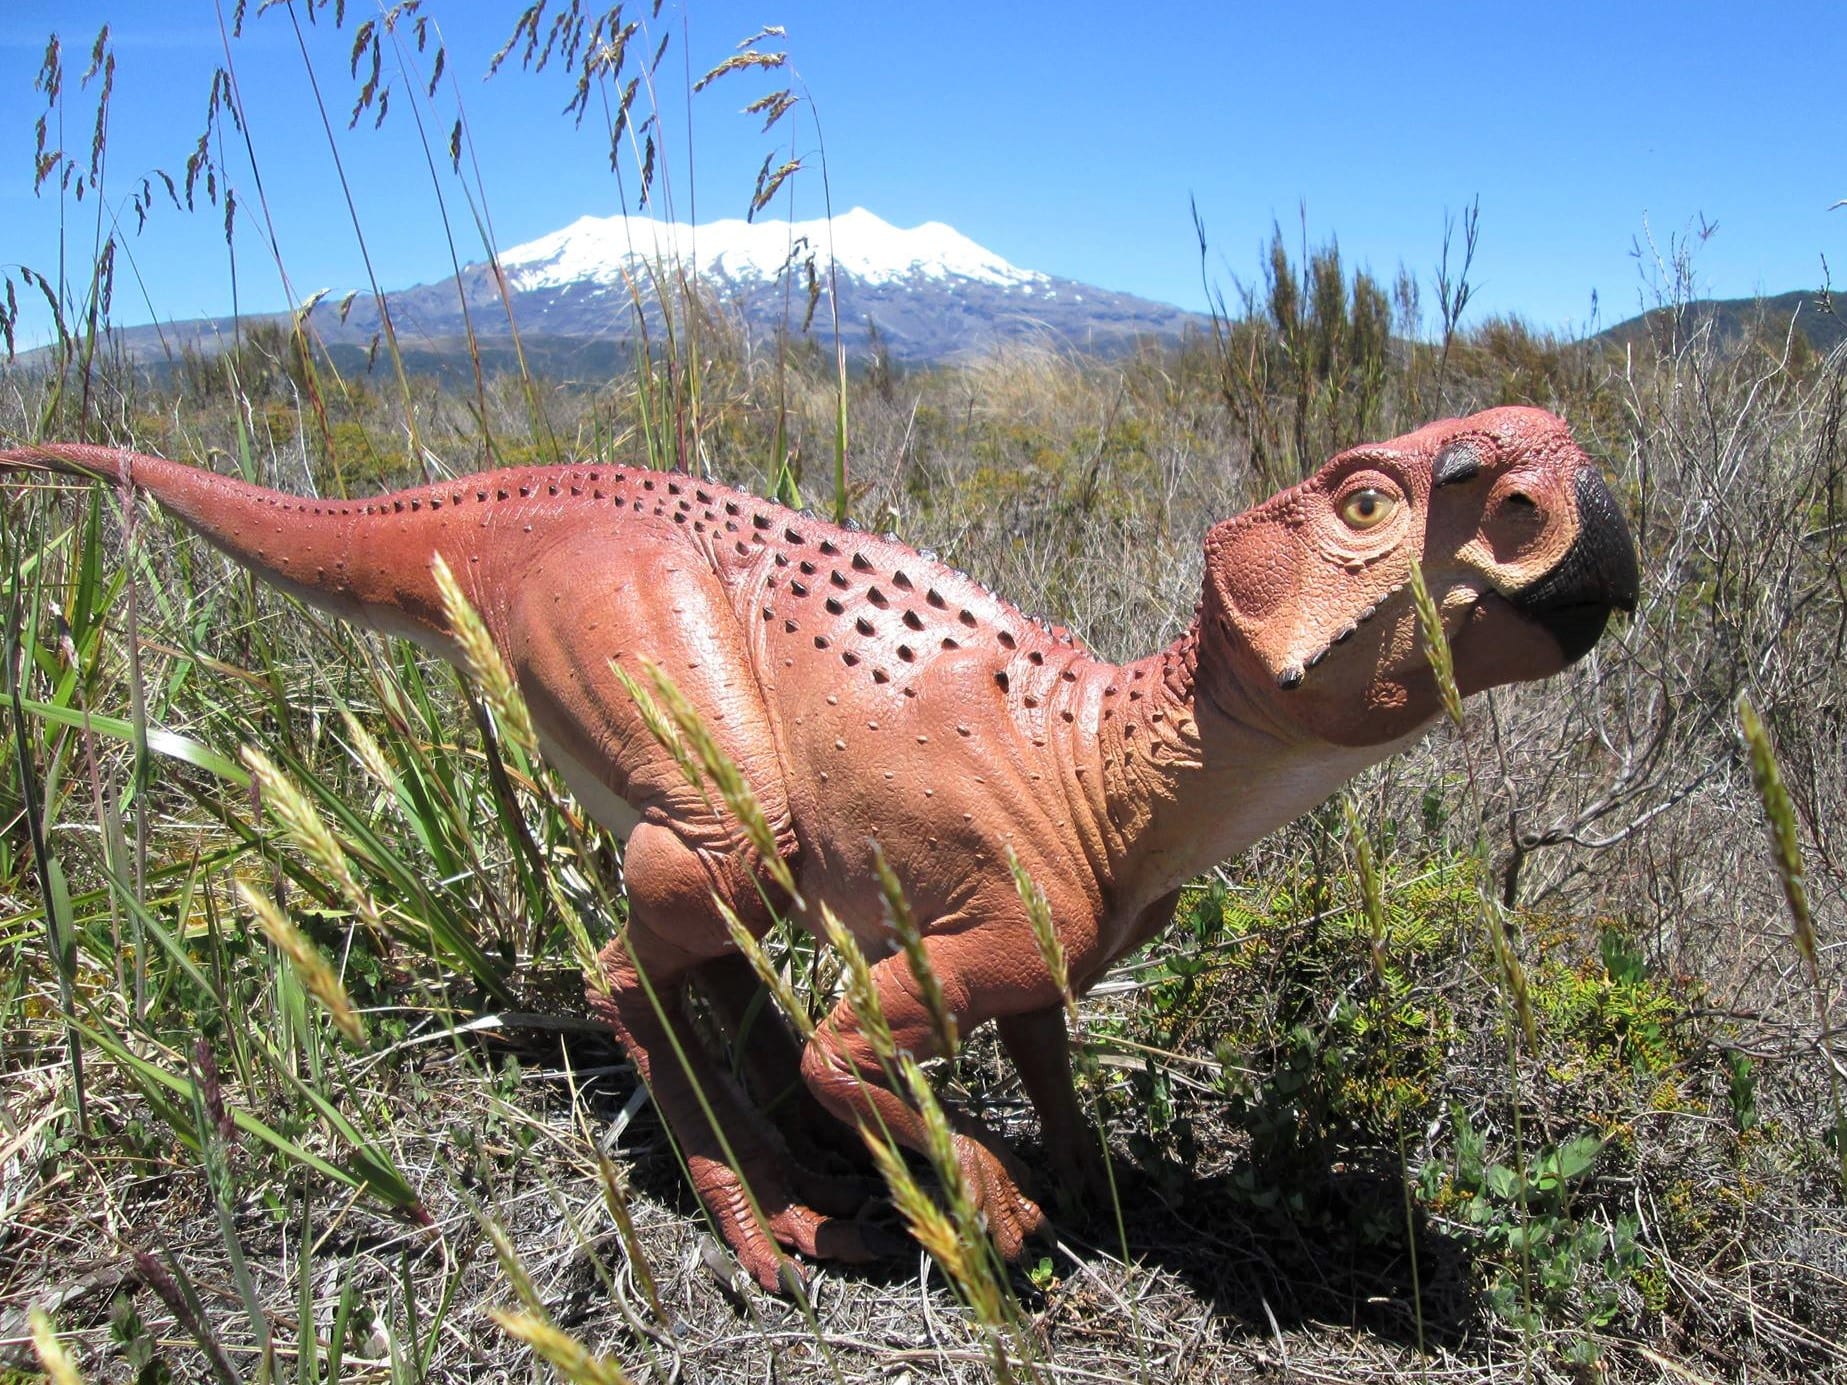 Psittacosaurus Dinosaur in front of Mt Ruapehu